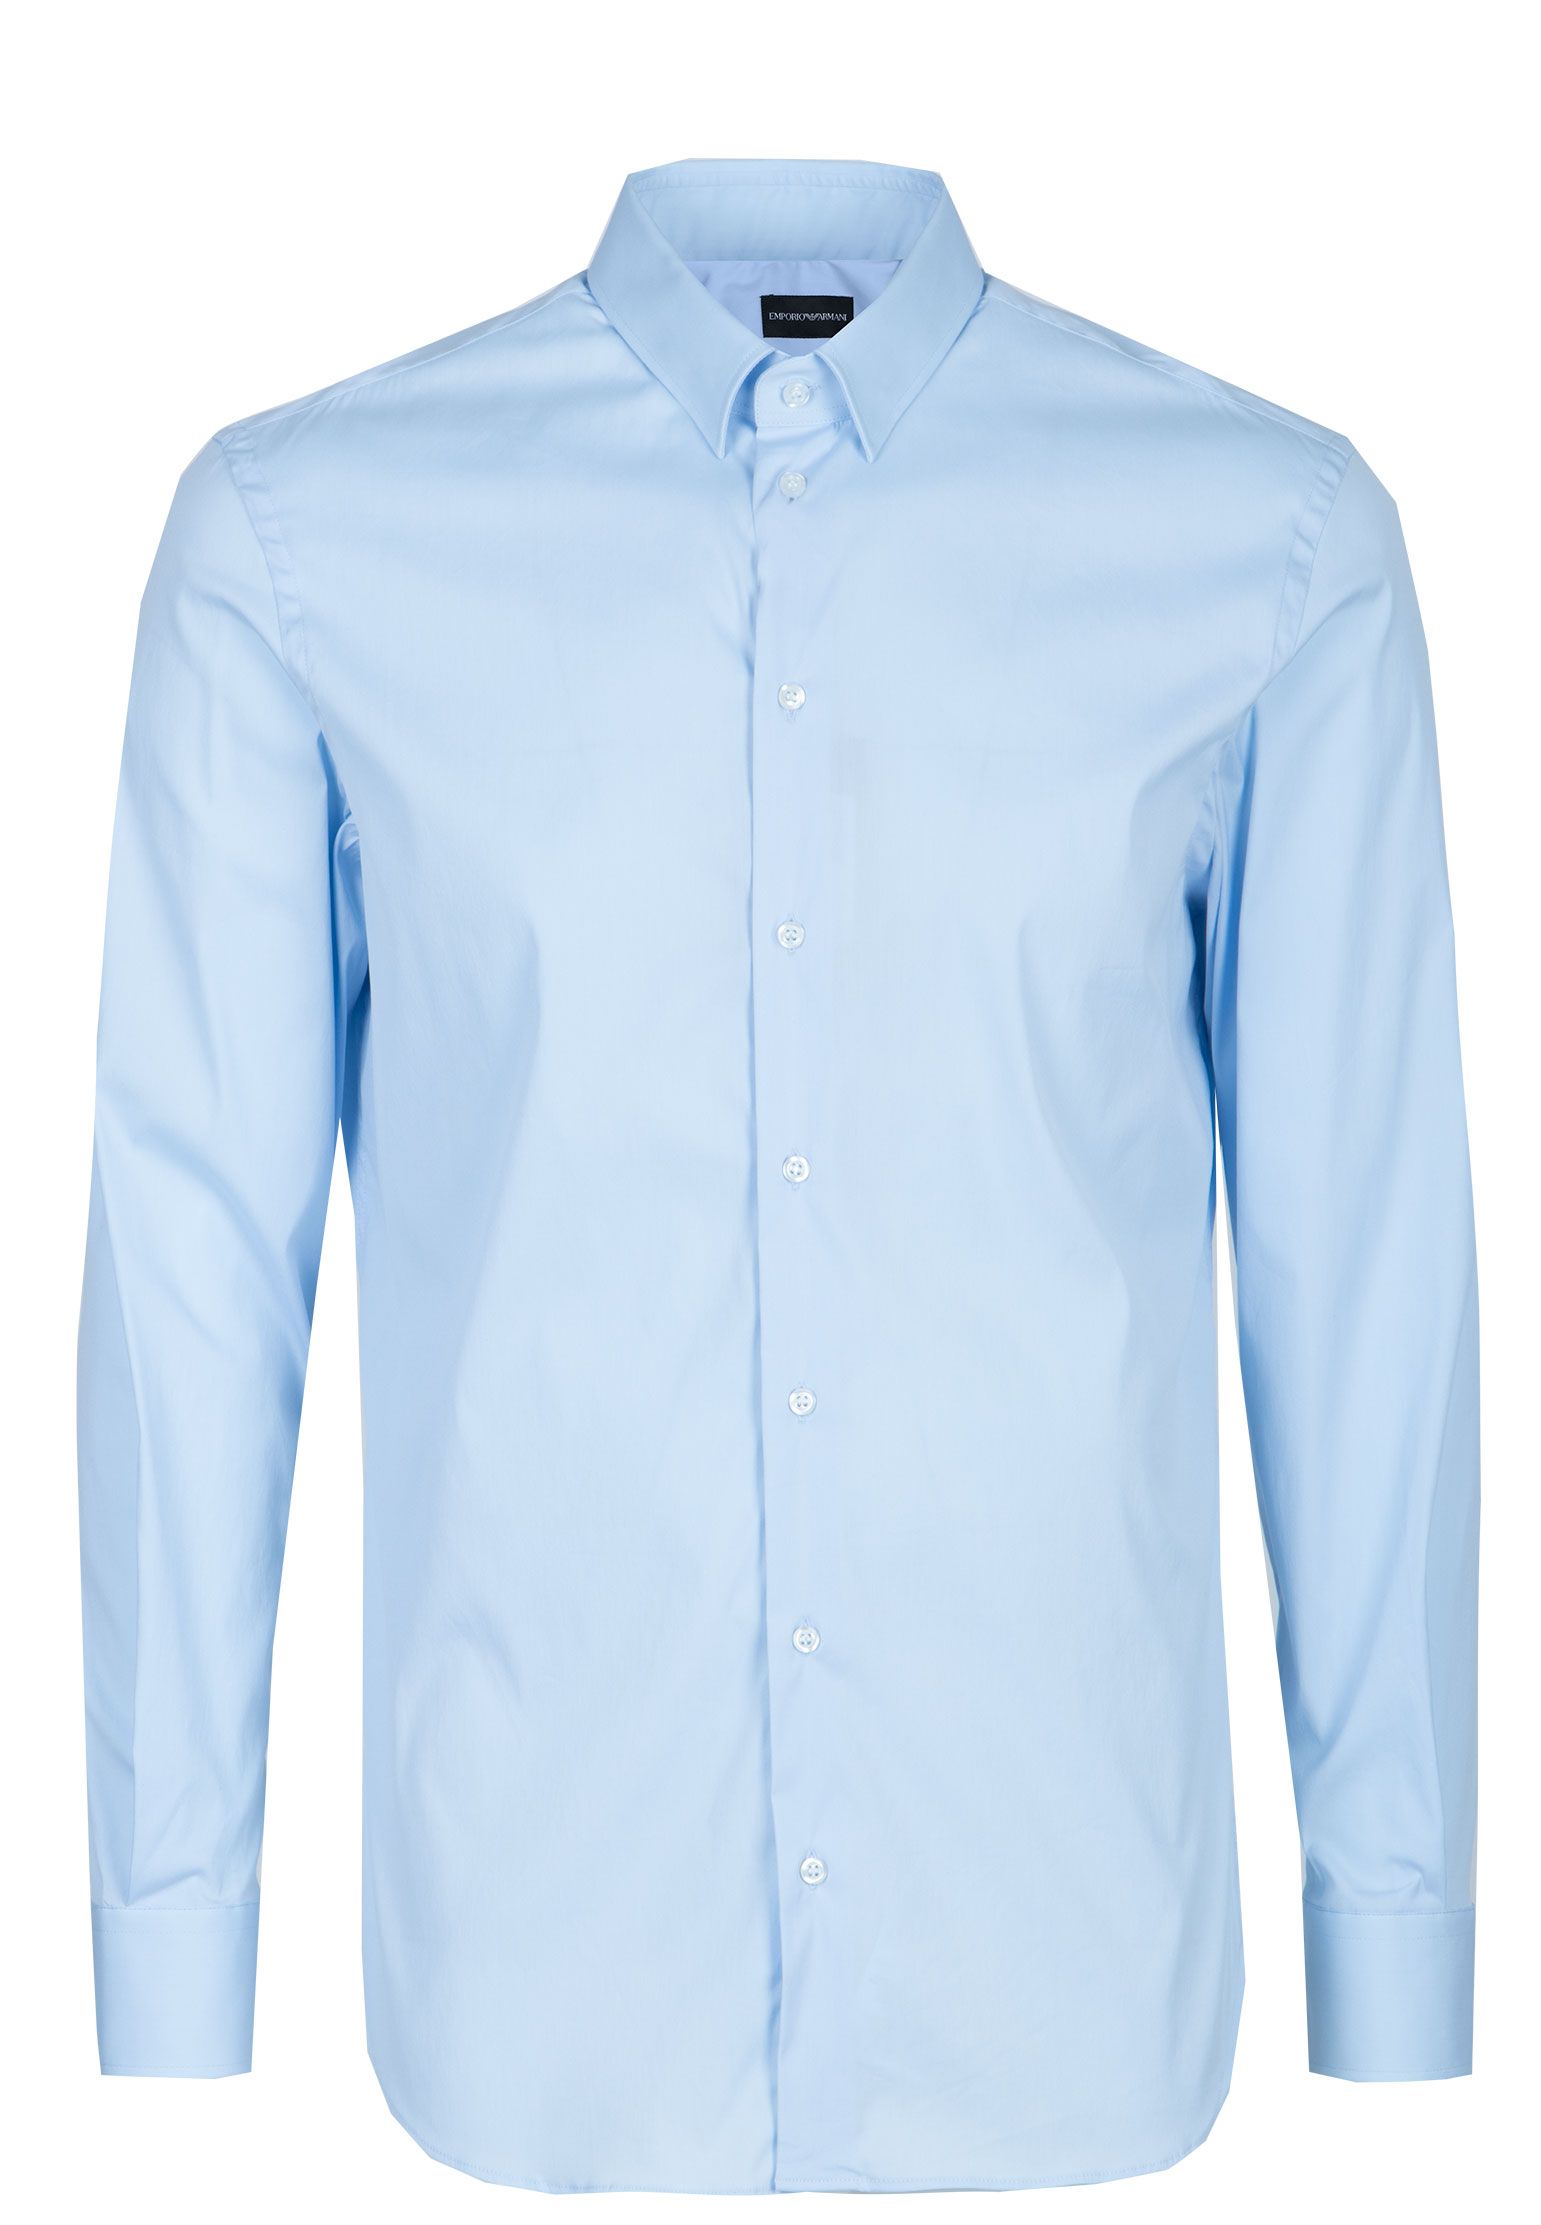 Рубашка мужская Emporio Armani 99158 голубая 41